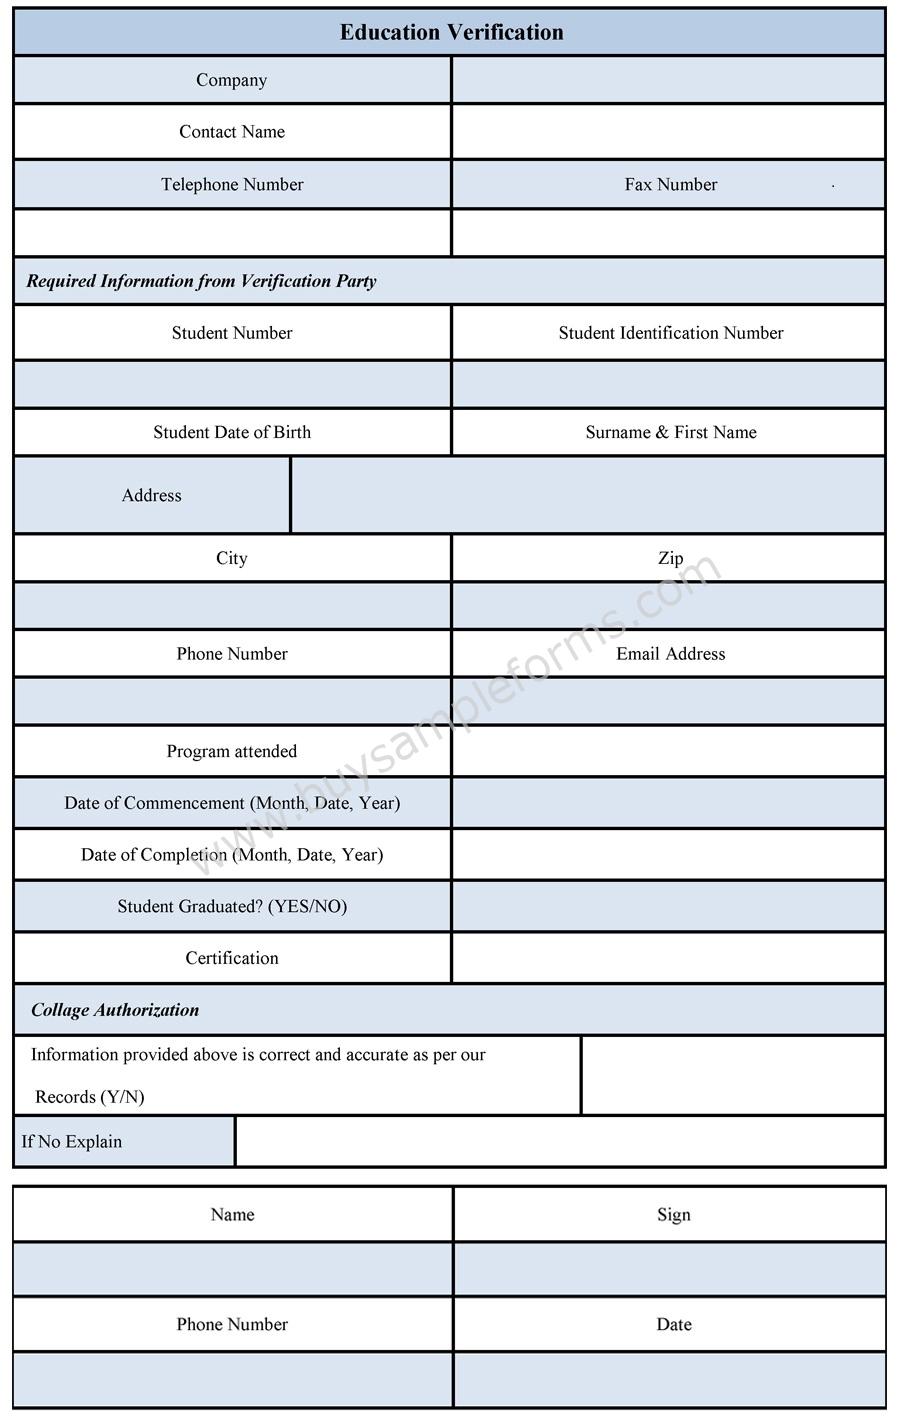 Education verification Form Sample